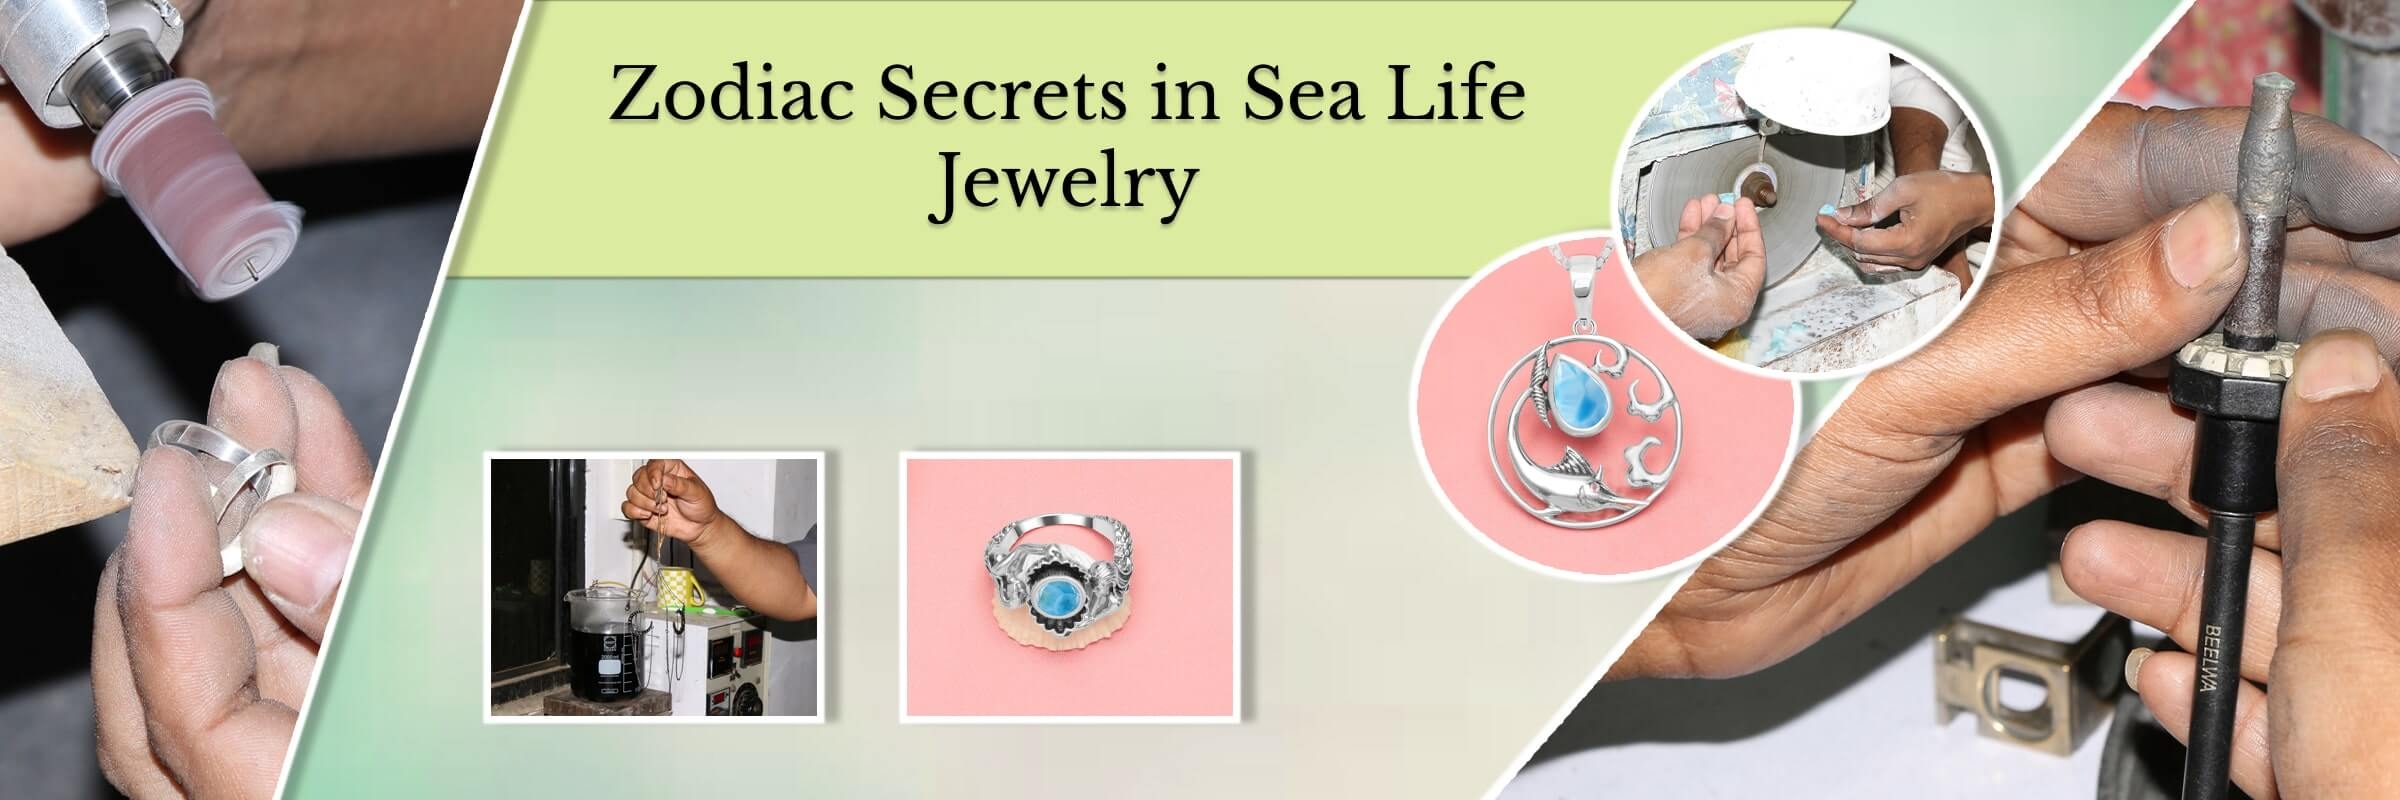 Does the Sea Life Jewelry Possess Zodiac Properties?